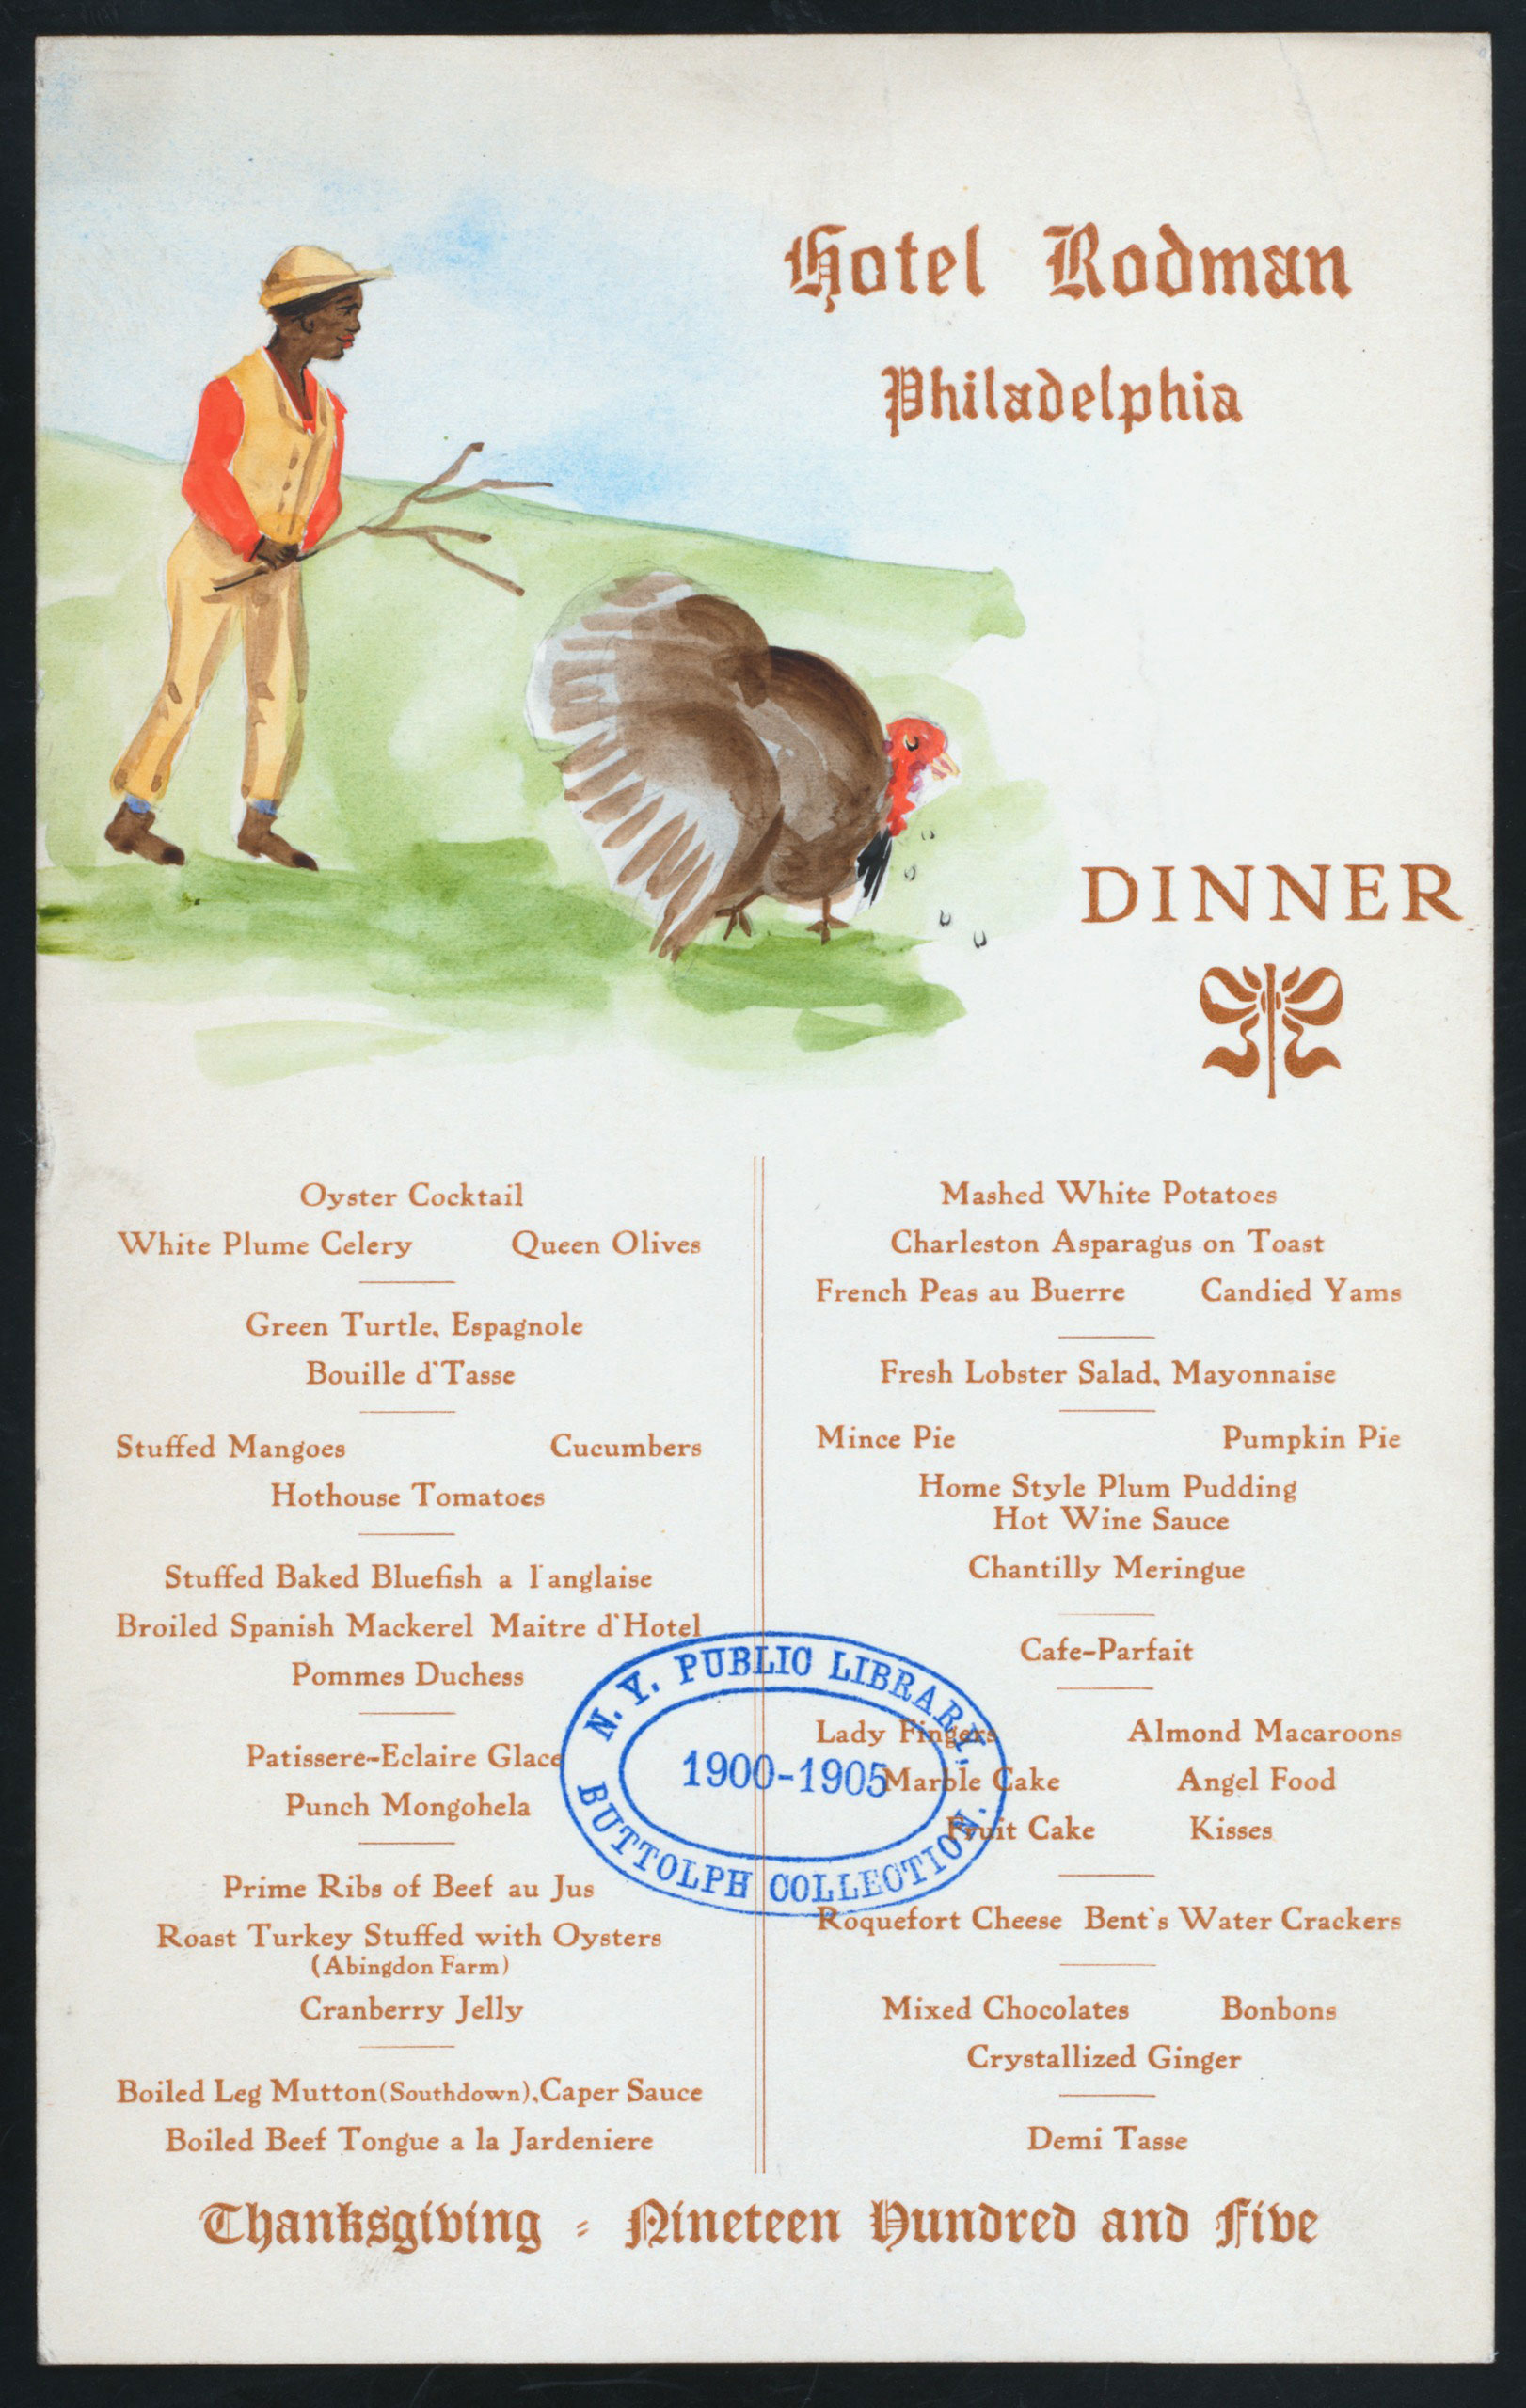 Thanksgiving Dinner menu at the Hotel Rodman in Philadelphia, PA, 1905.